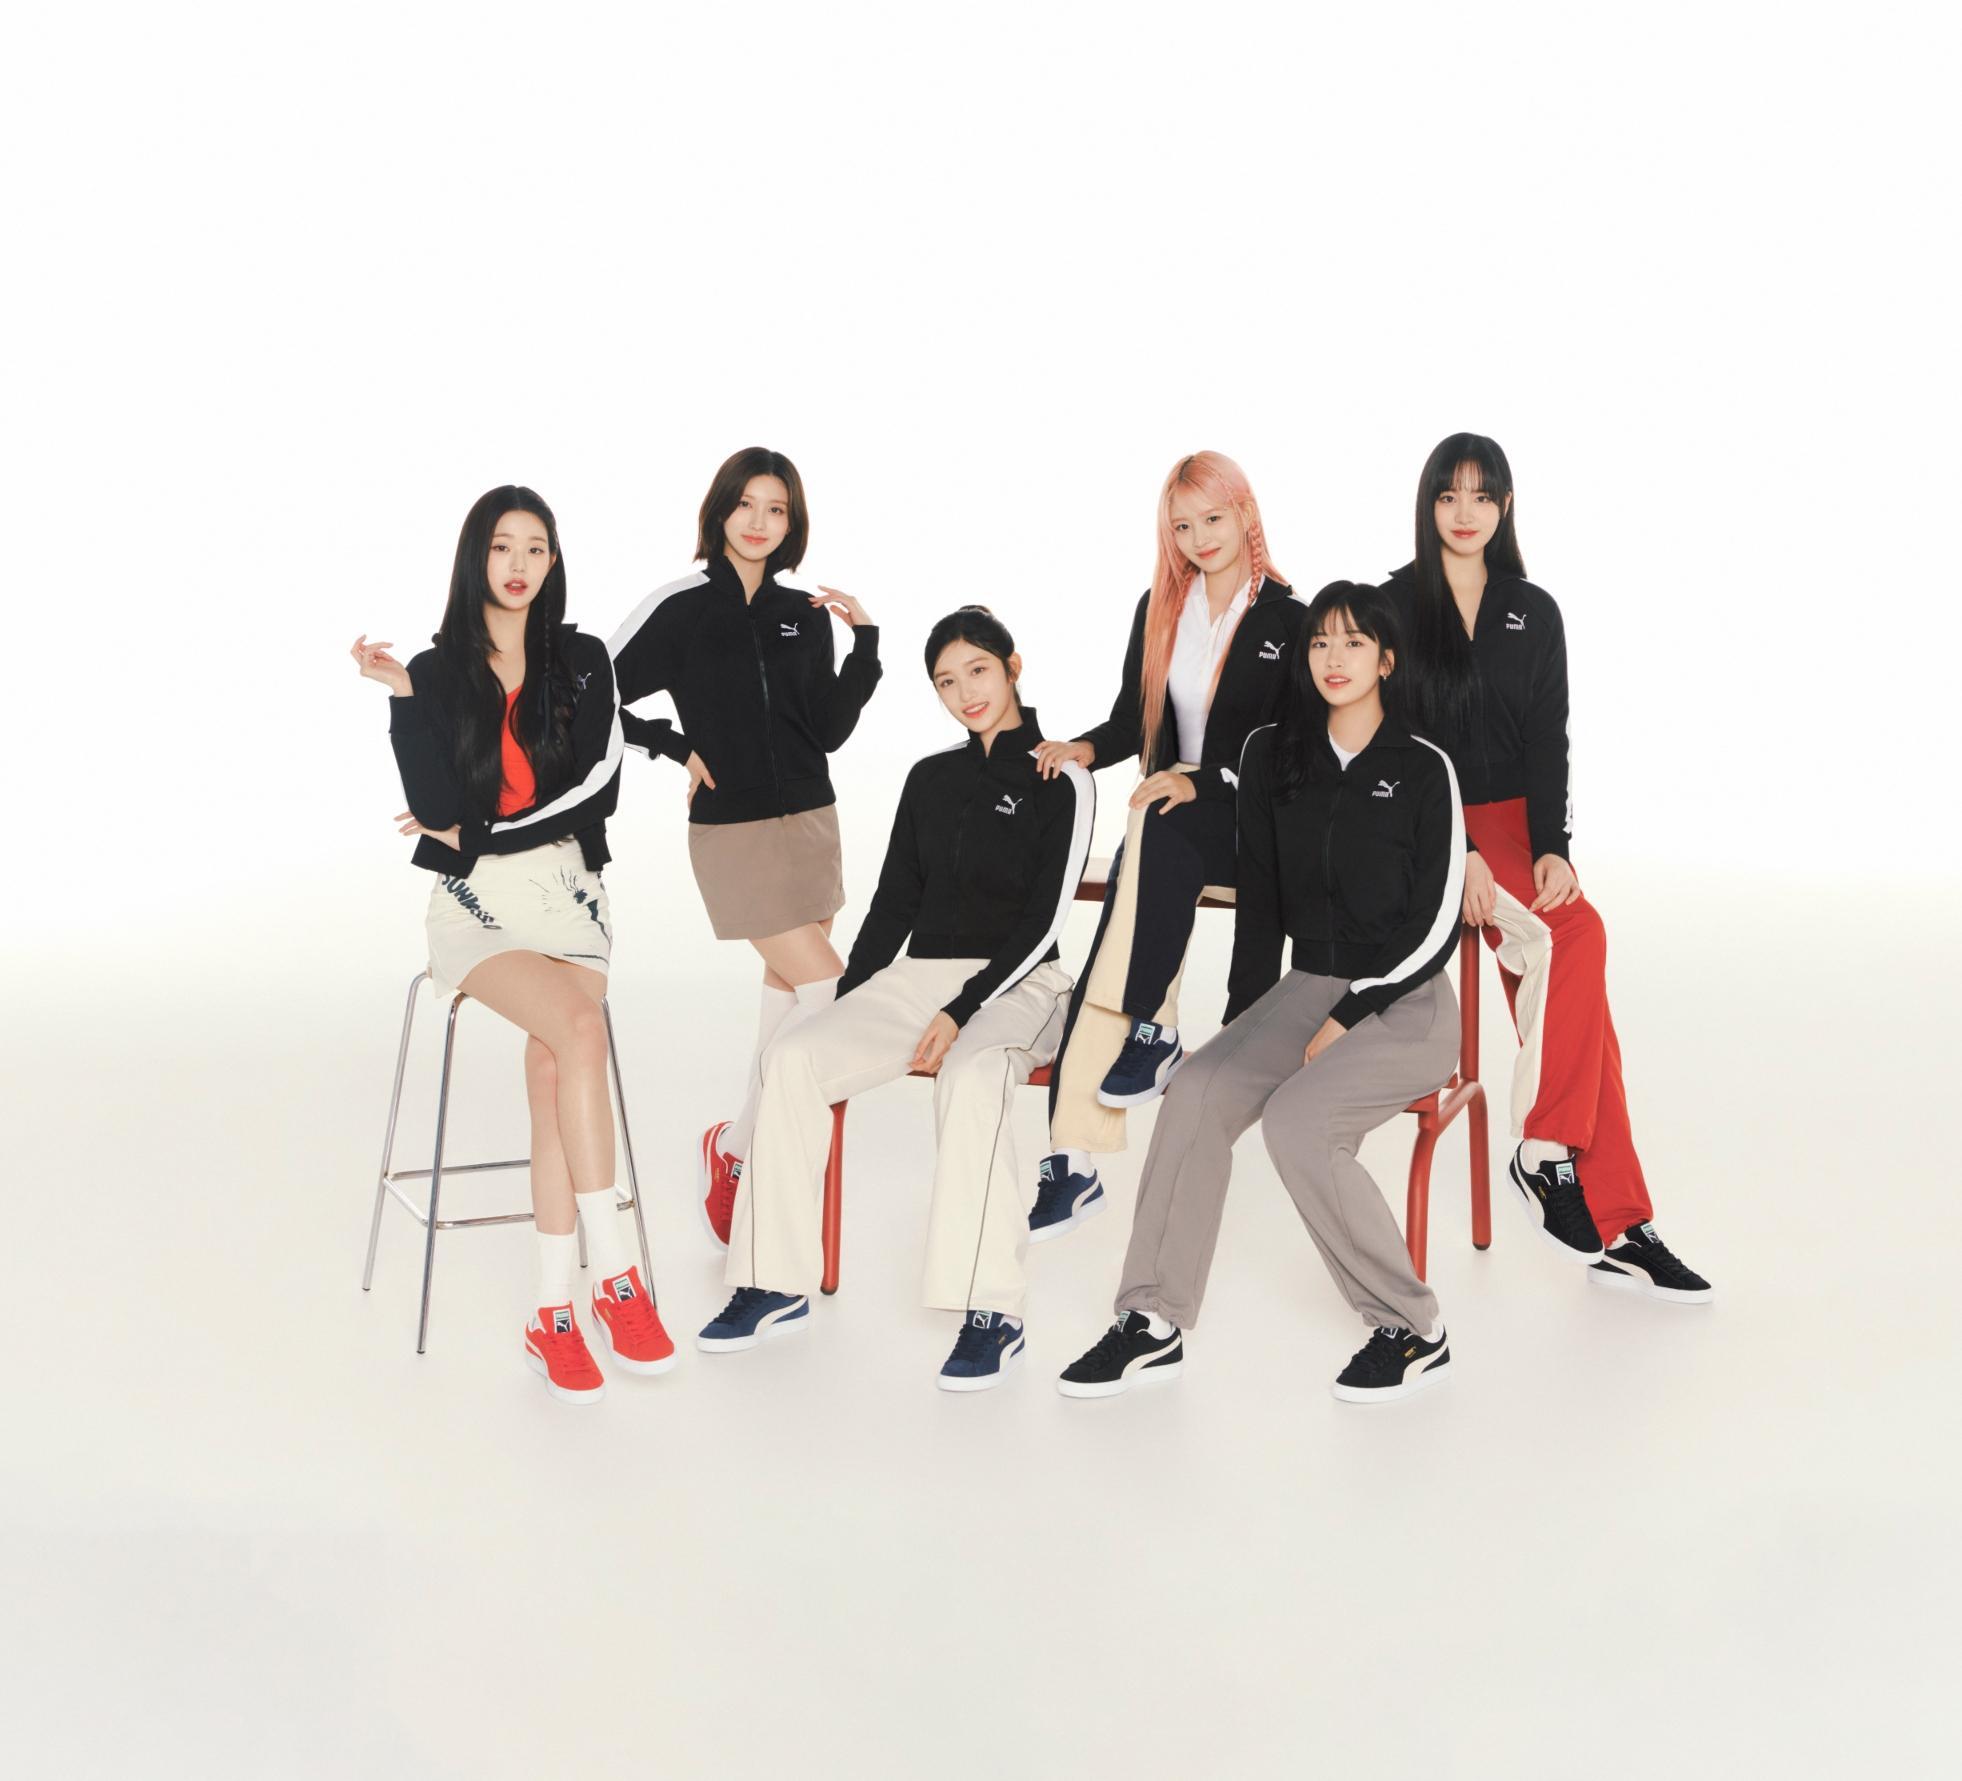 PUMA Selects K-Pop Girl Group “IVE“ as APAC Ambassador